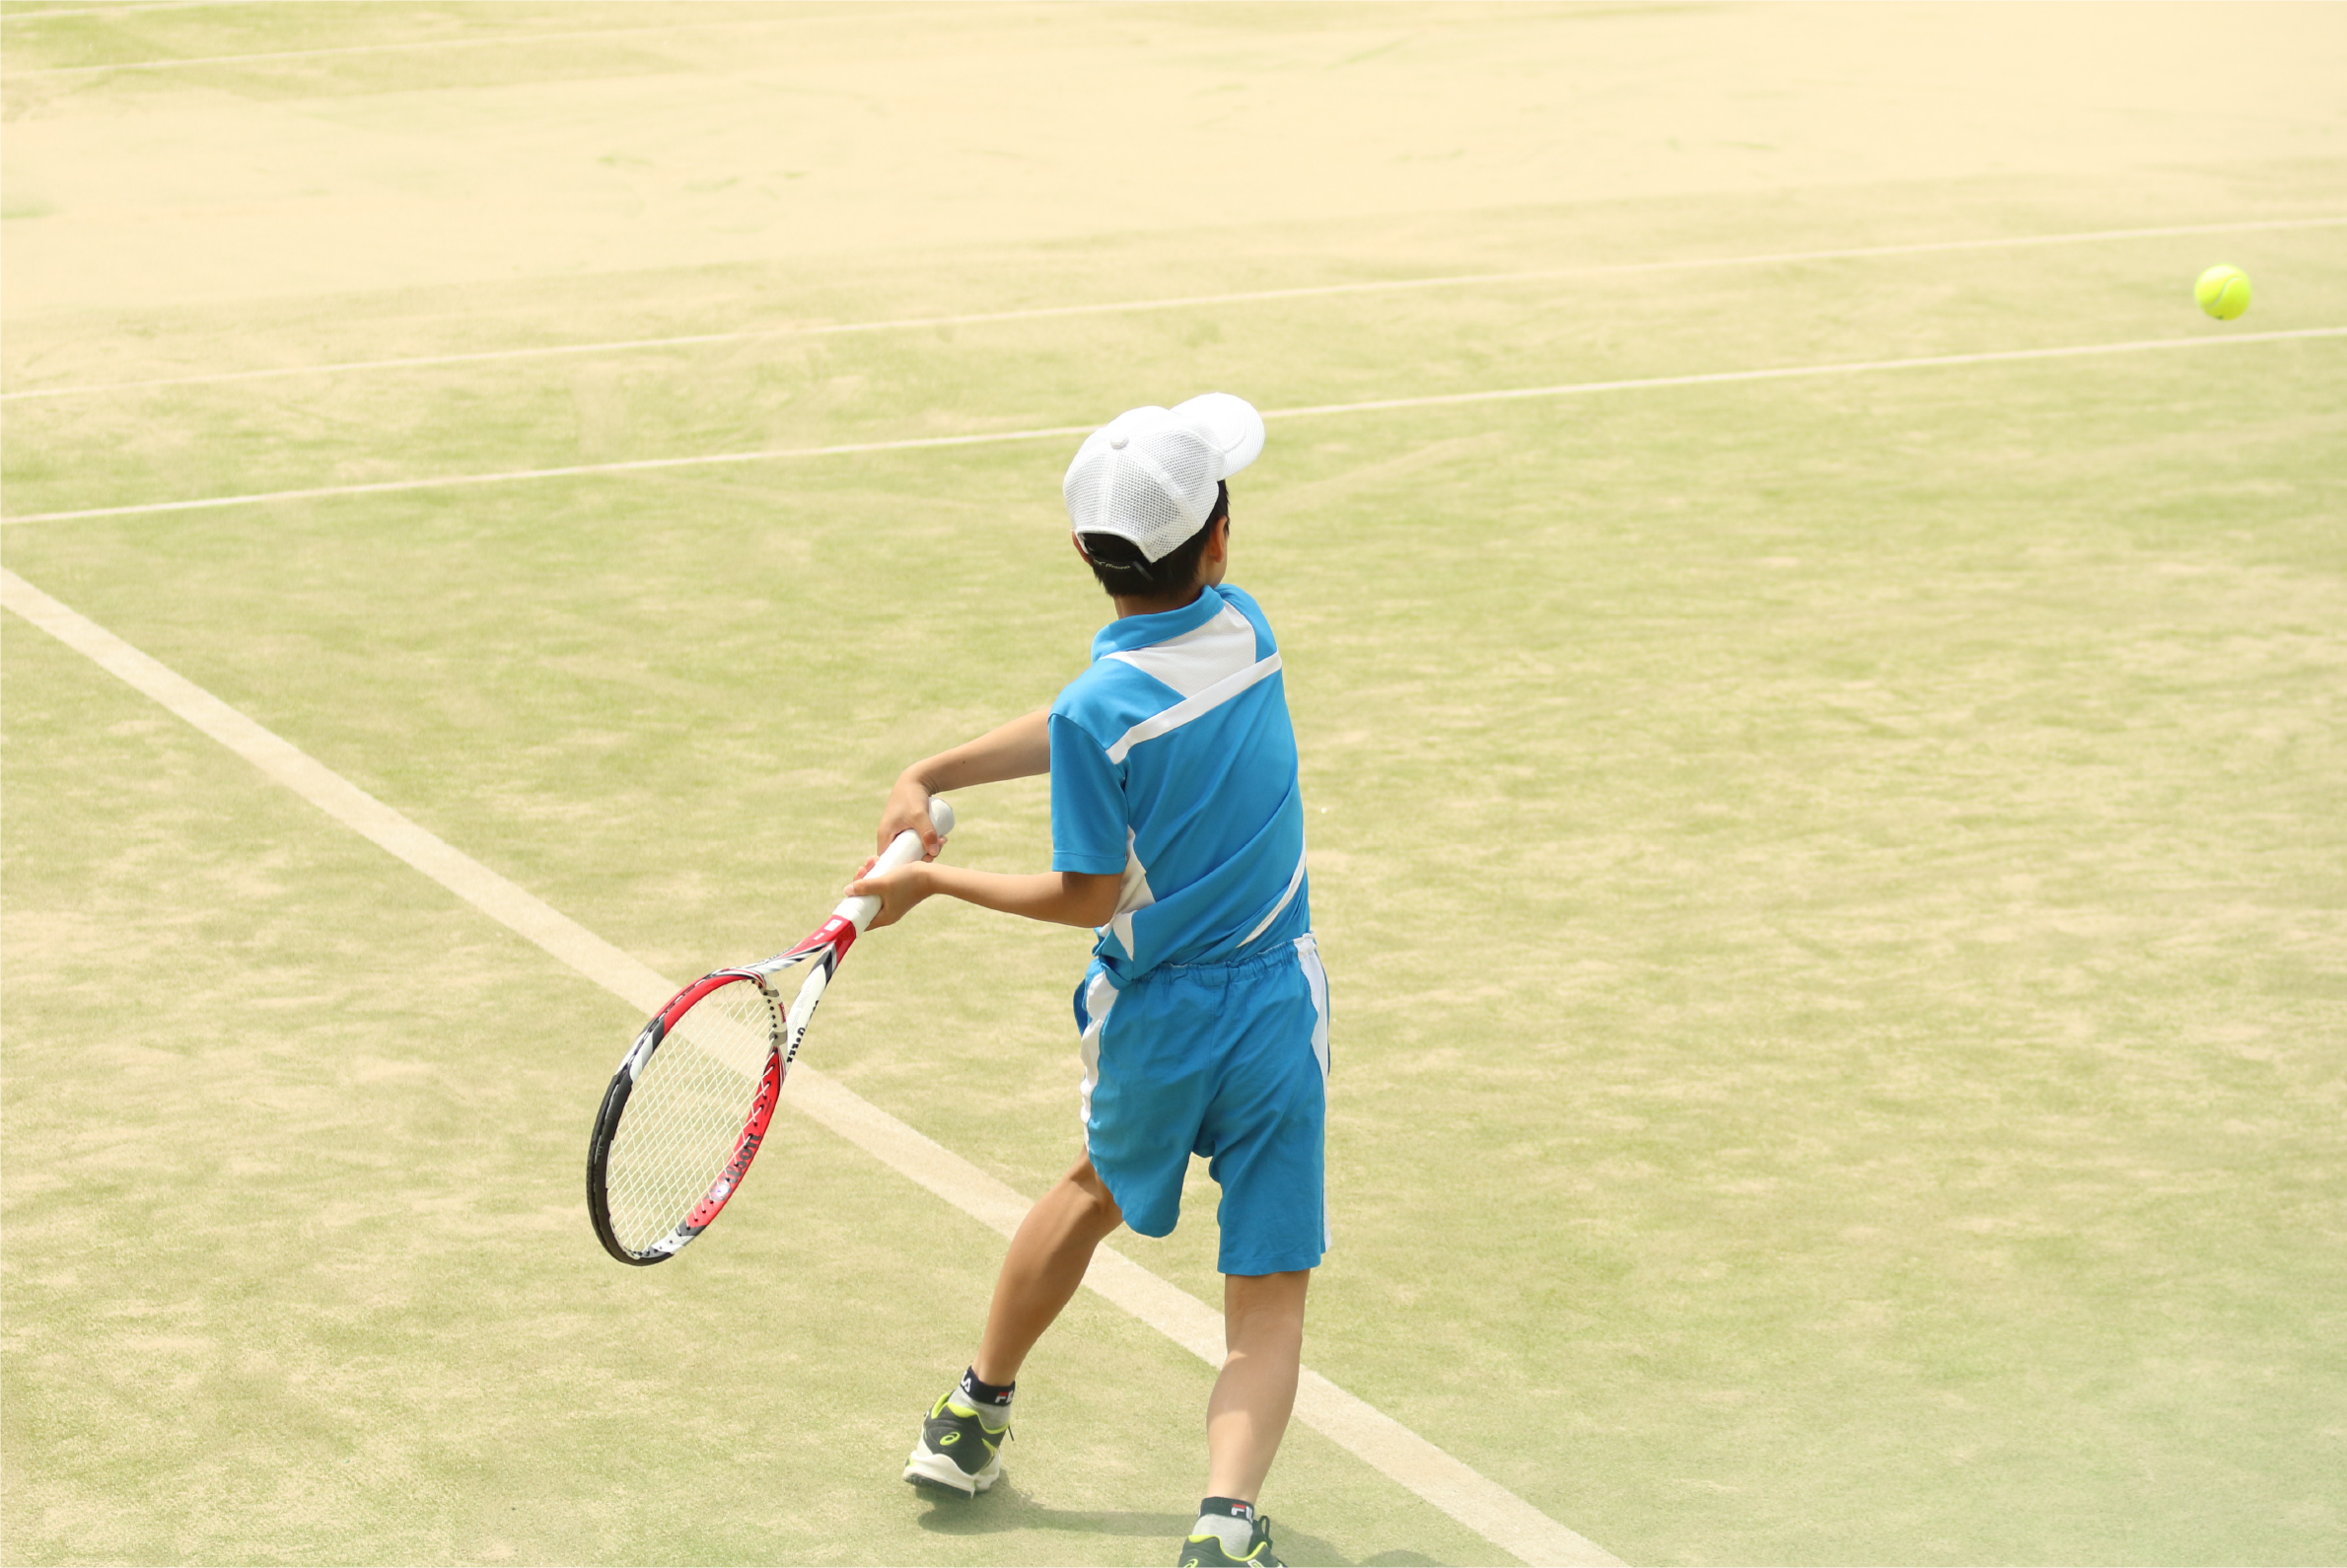 Kids Jr 夏休み短期テニス体験教室 イベント 南港btb